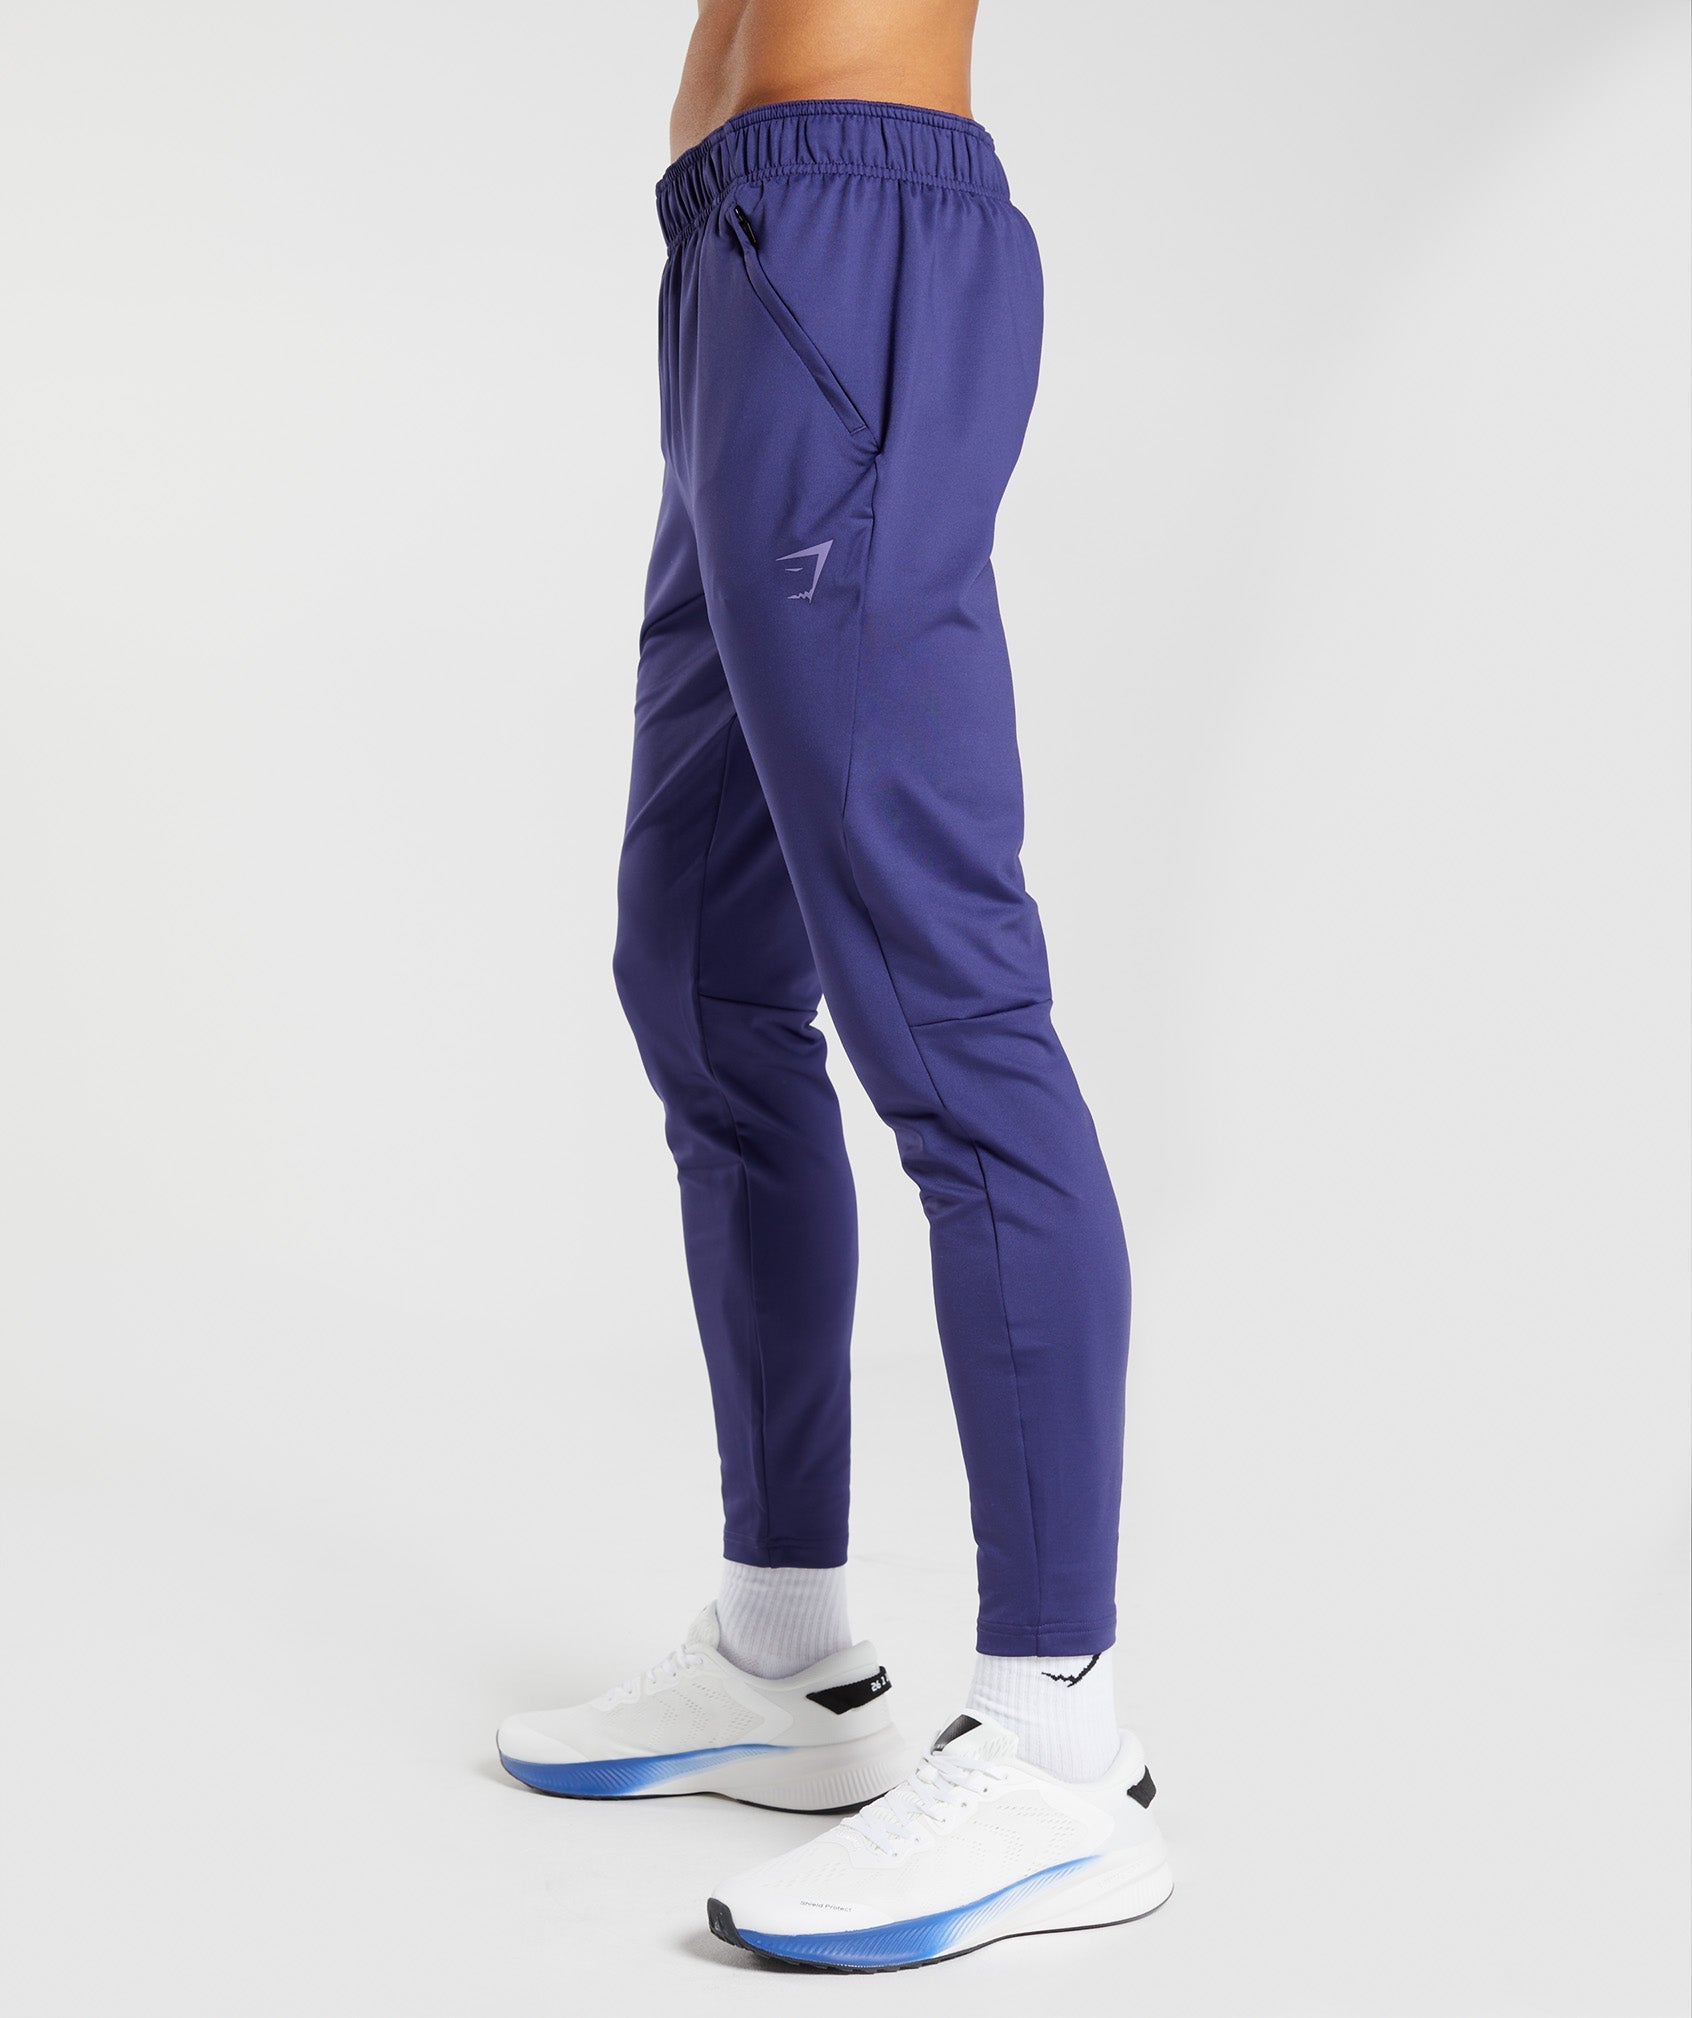 Gymshark Purple Athletic Sweat Pants for Men